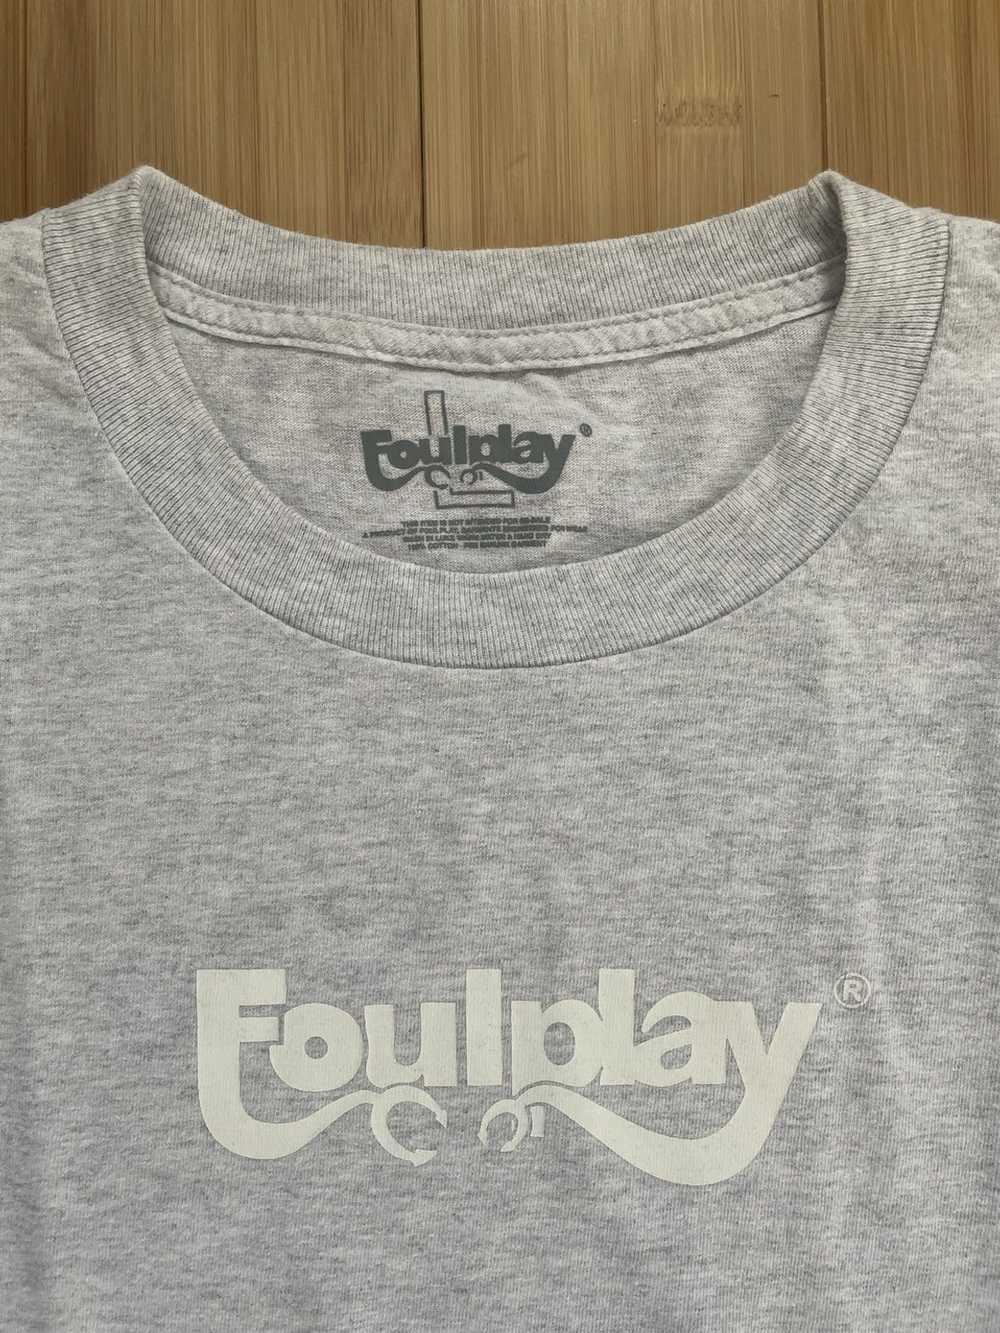 Foulplay Company Foulplay shirt - image 3